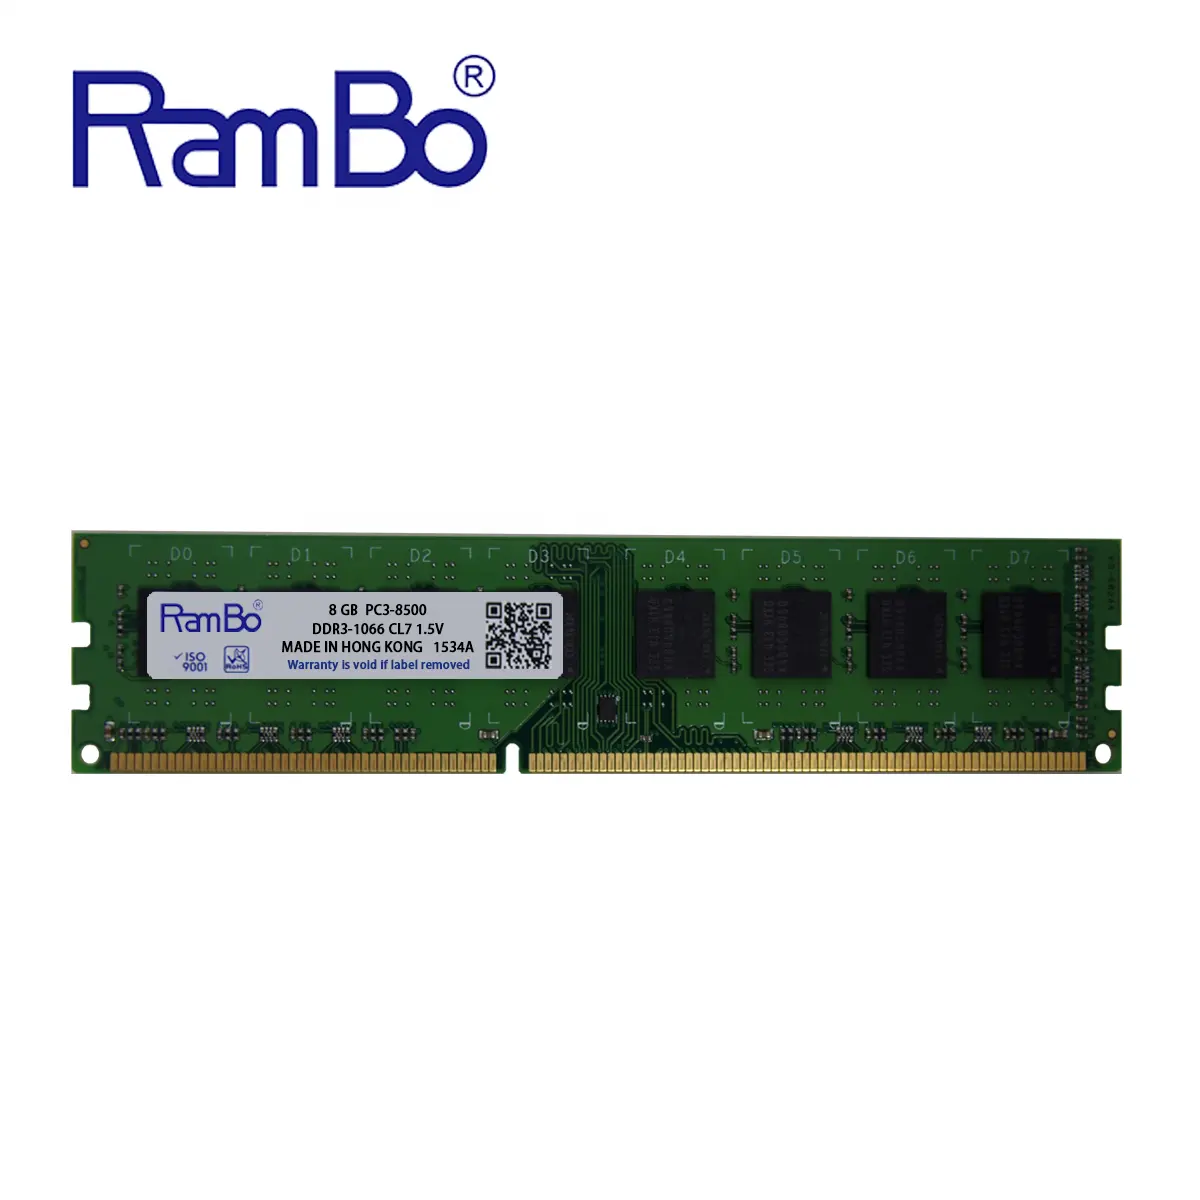 Rambo memória ram dimm ddr3, 1066mhz PC3-8500 cl7 16chips 8gb ram, desktop